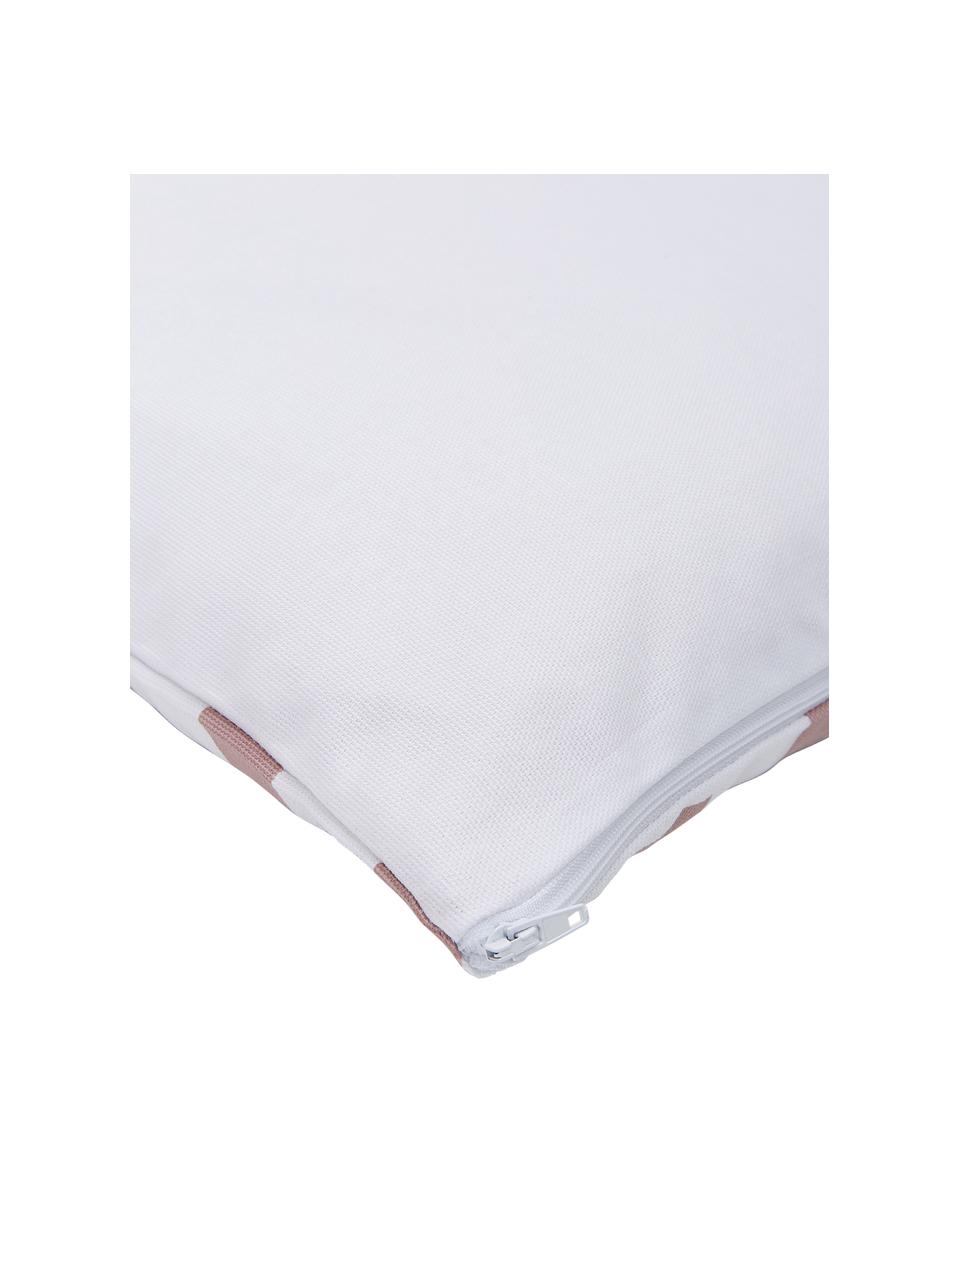 Fundas de almohada de lino lavado Nature, 2 uds., 100% algodón, Blanco, rosa palo, An 45 x L 45 cm